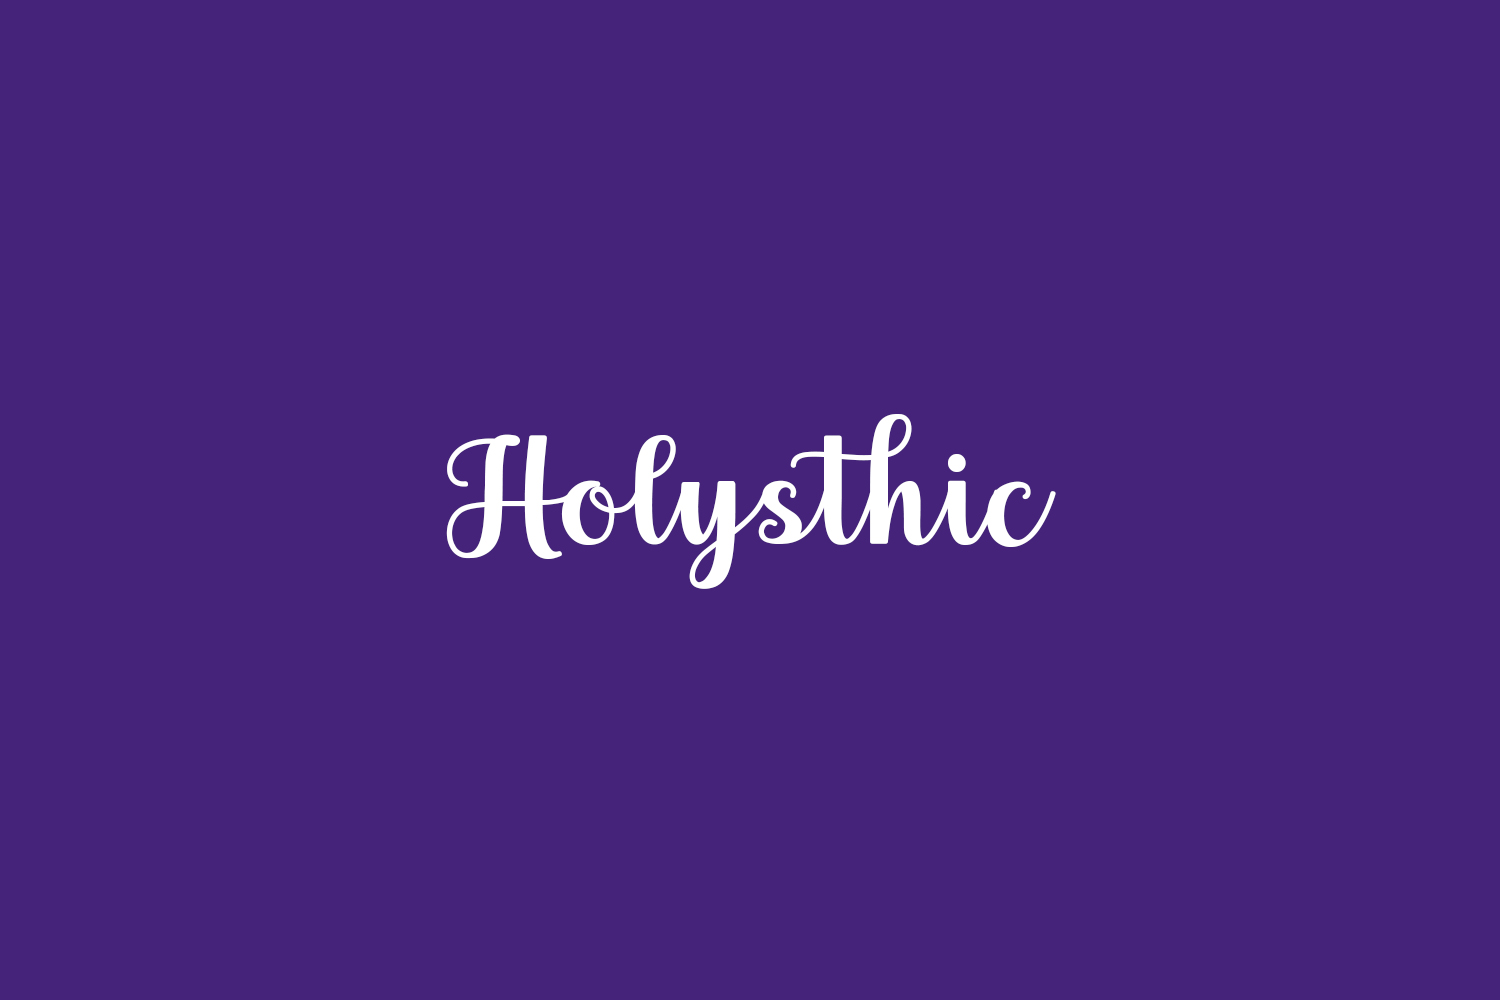 Holysthic Free Font